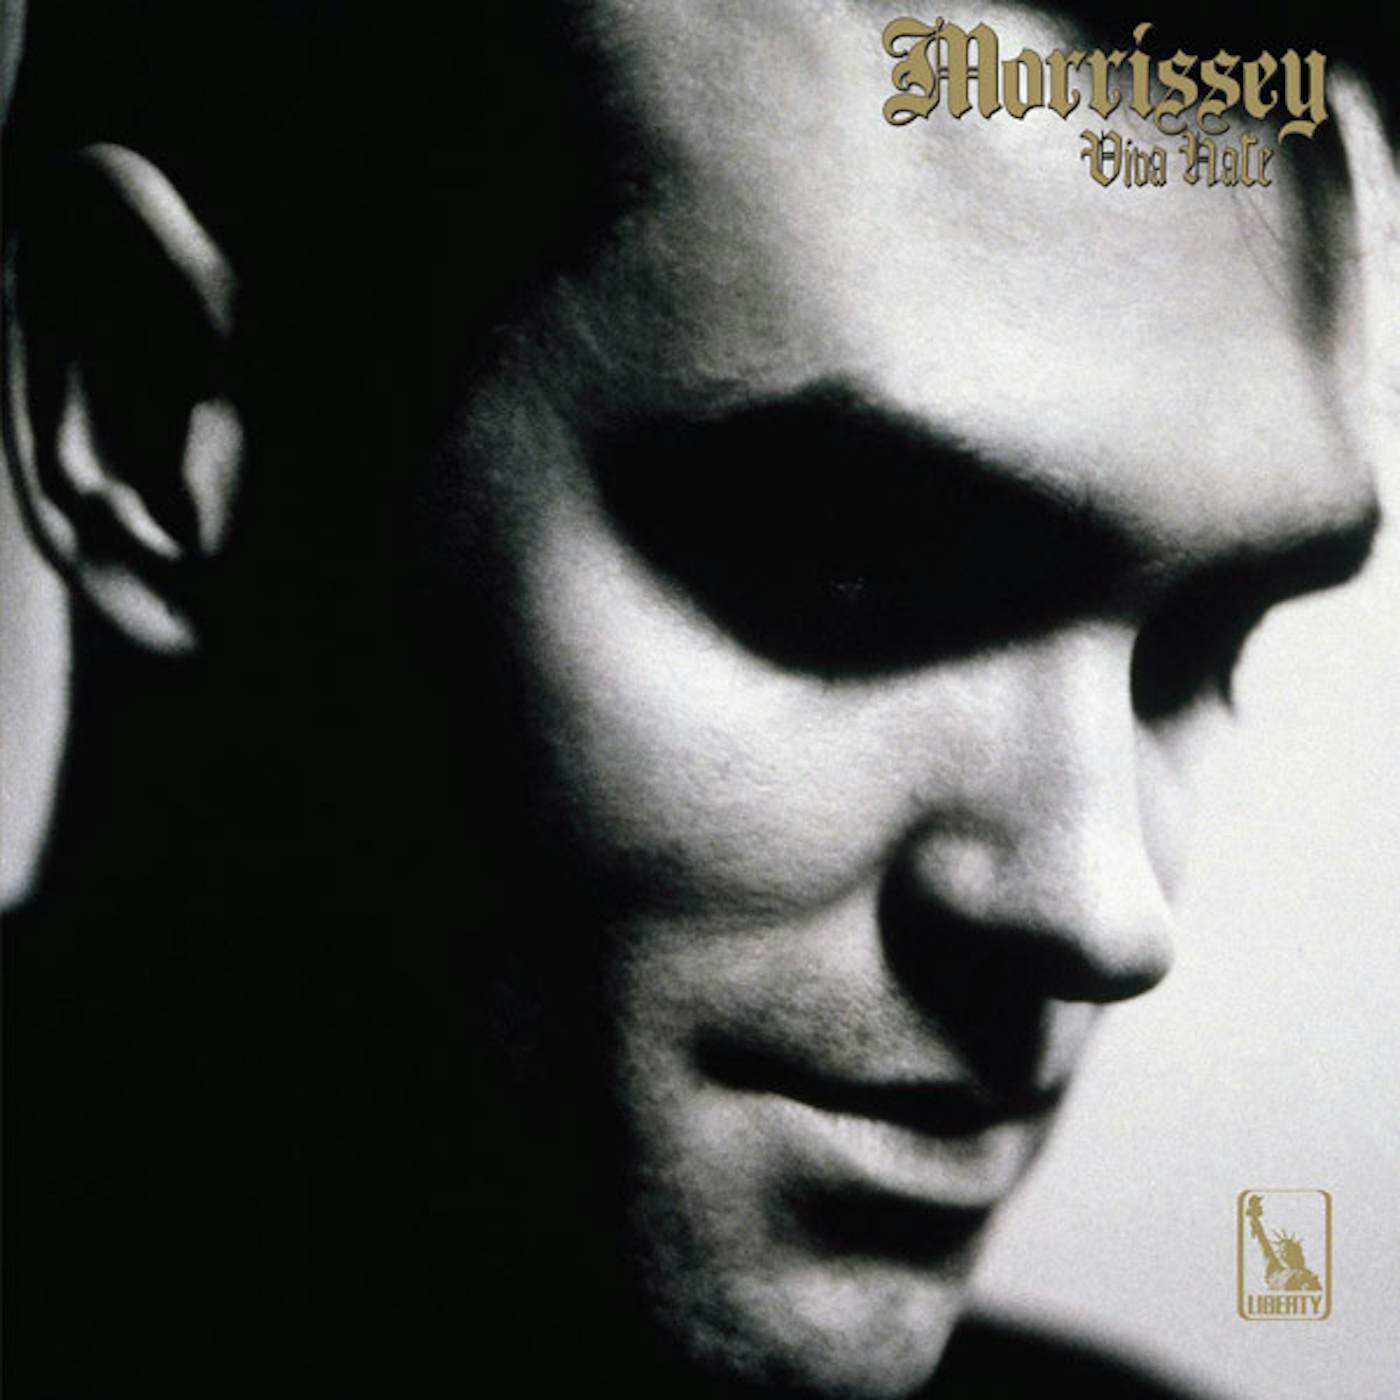 Morrissey Viva Hate Vinyl Record